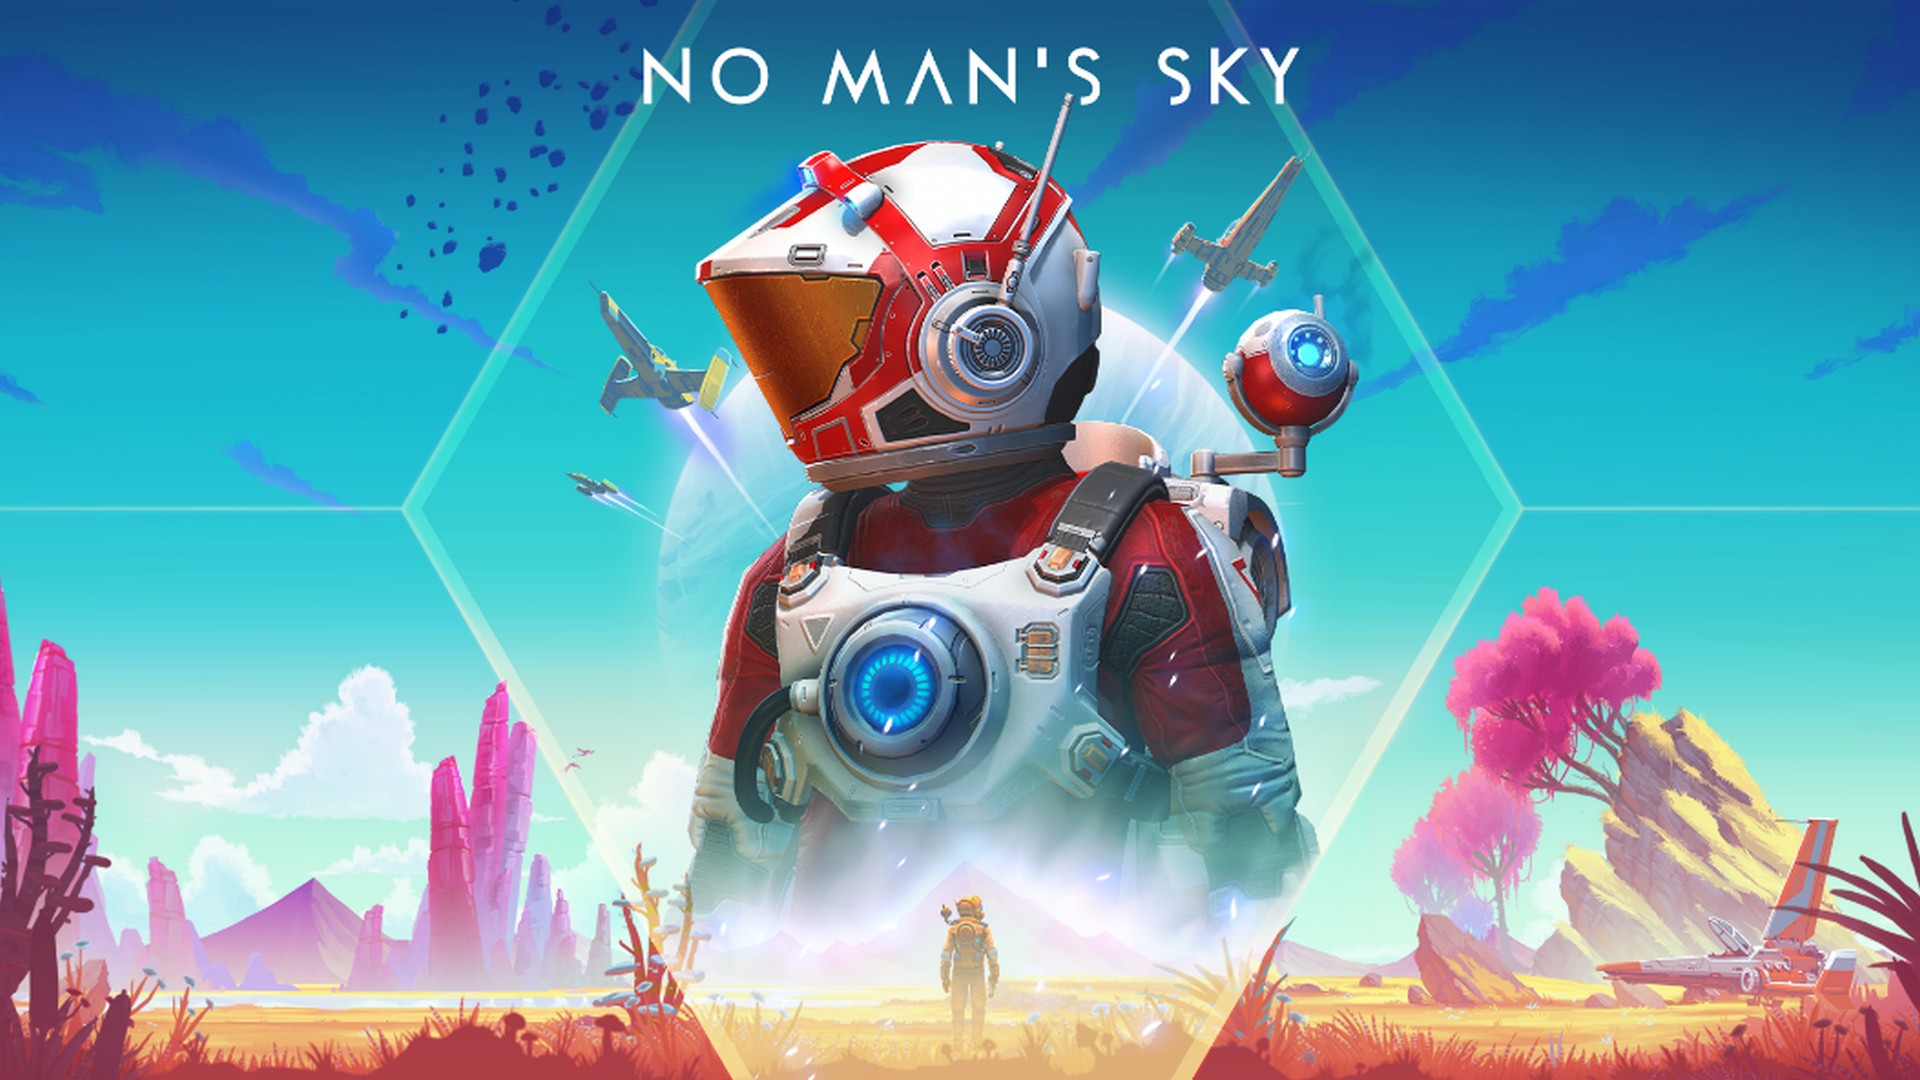 No Man’s Sky “Fractal” Free Update Brings PlayStation VR2 Support